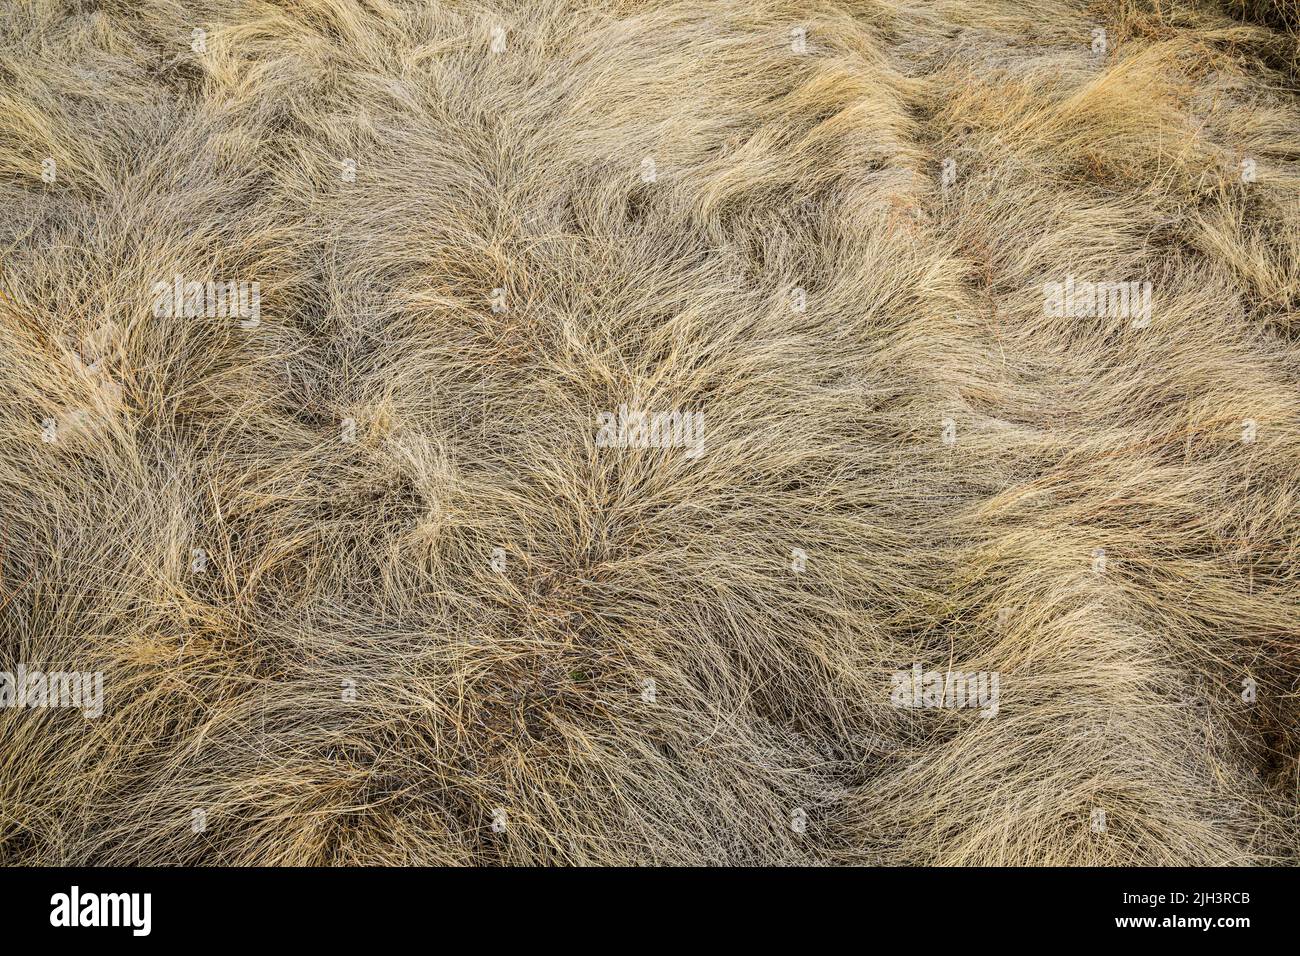 Dry grasses texture in Sabino Canyon Recreation Area, Arizona, USA. Stock Photo